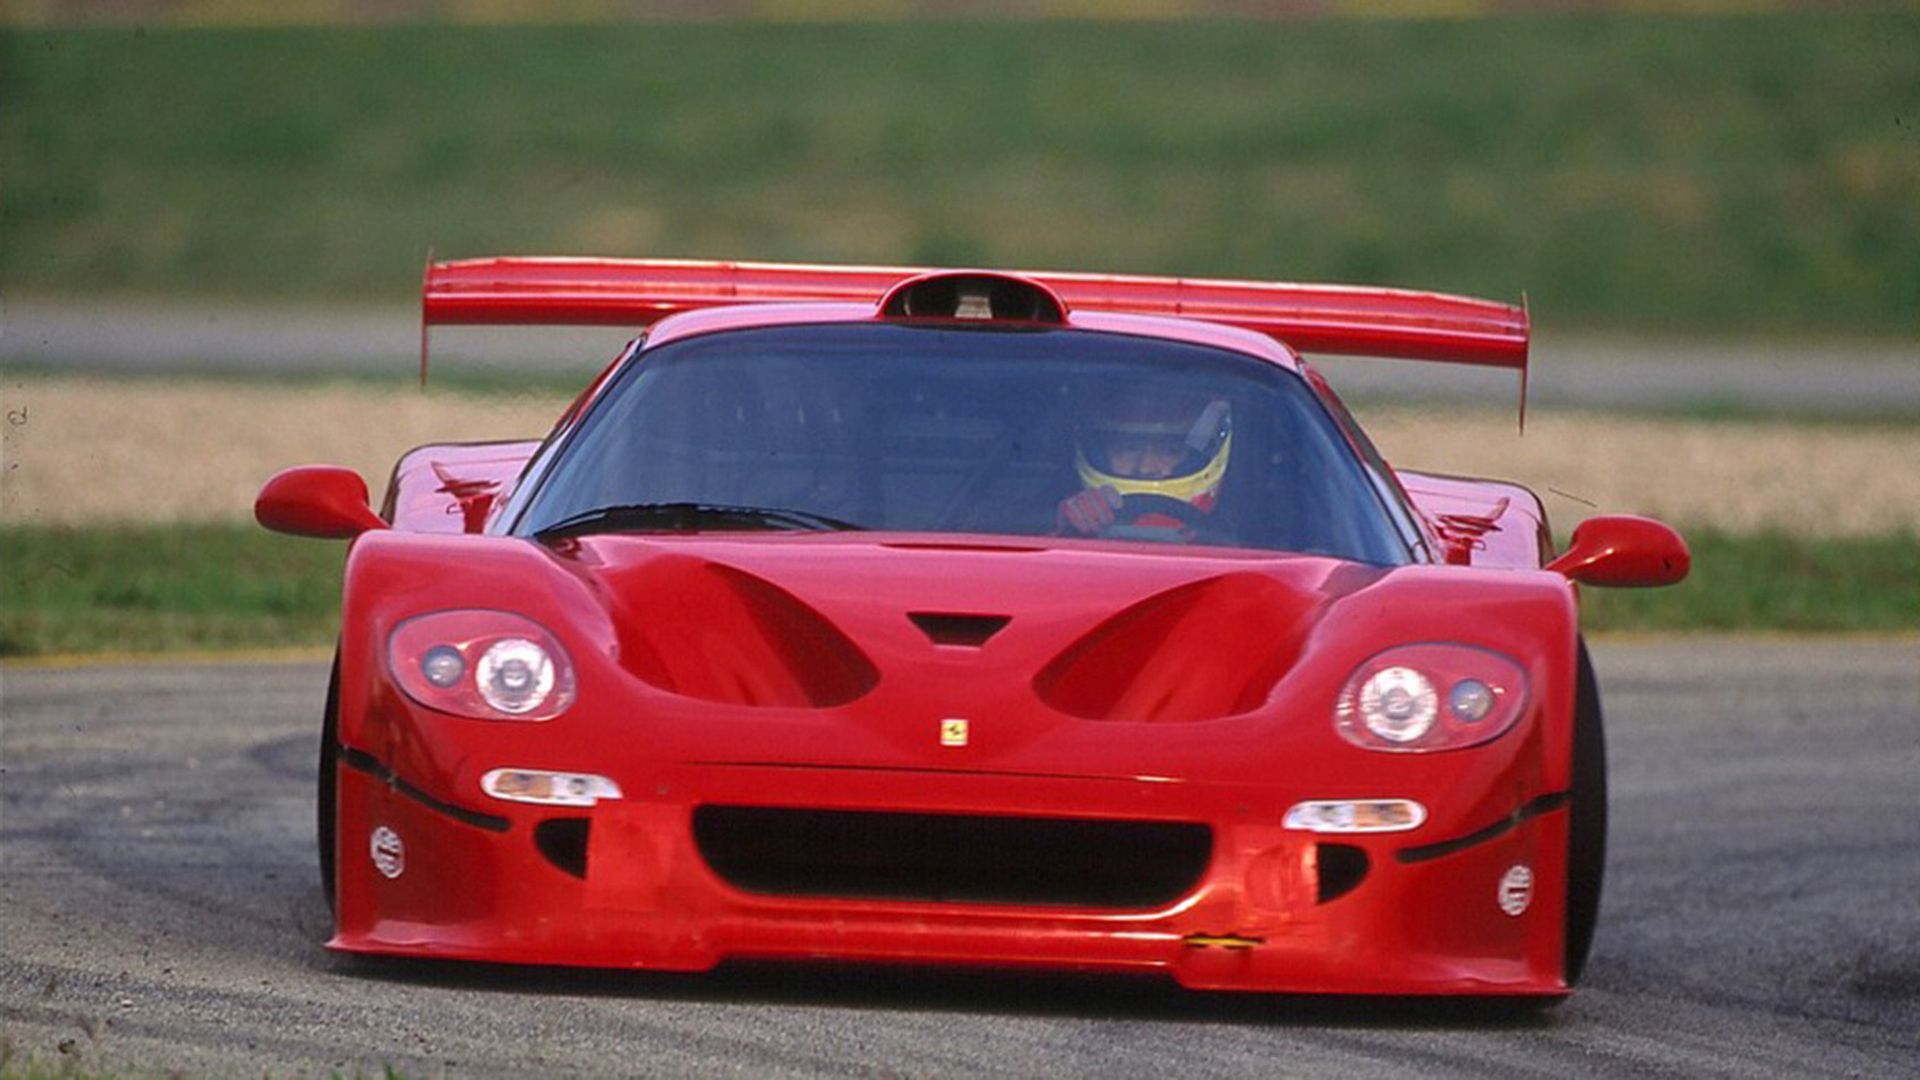 The 1996 Ferrari F50 GT